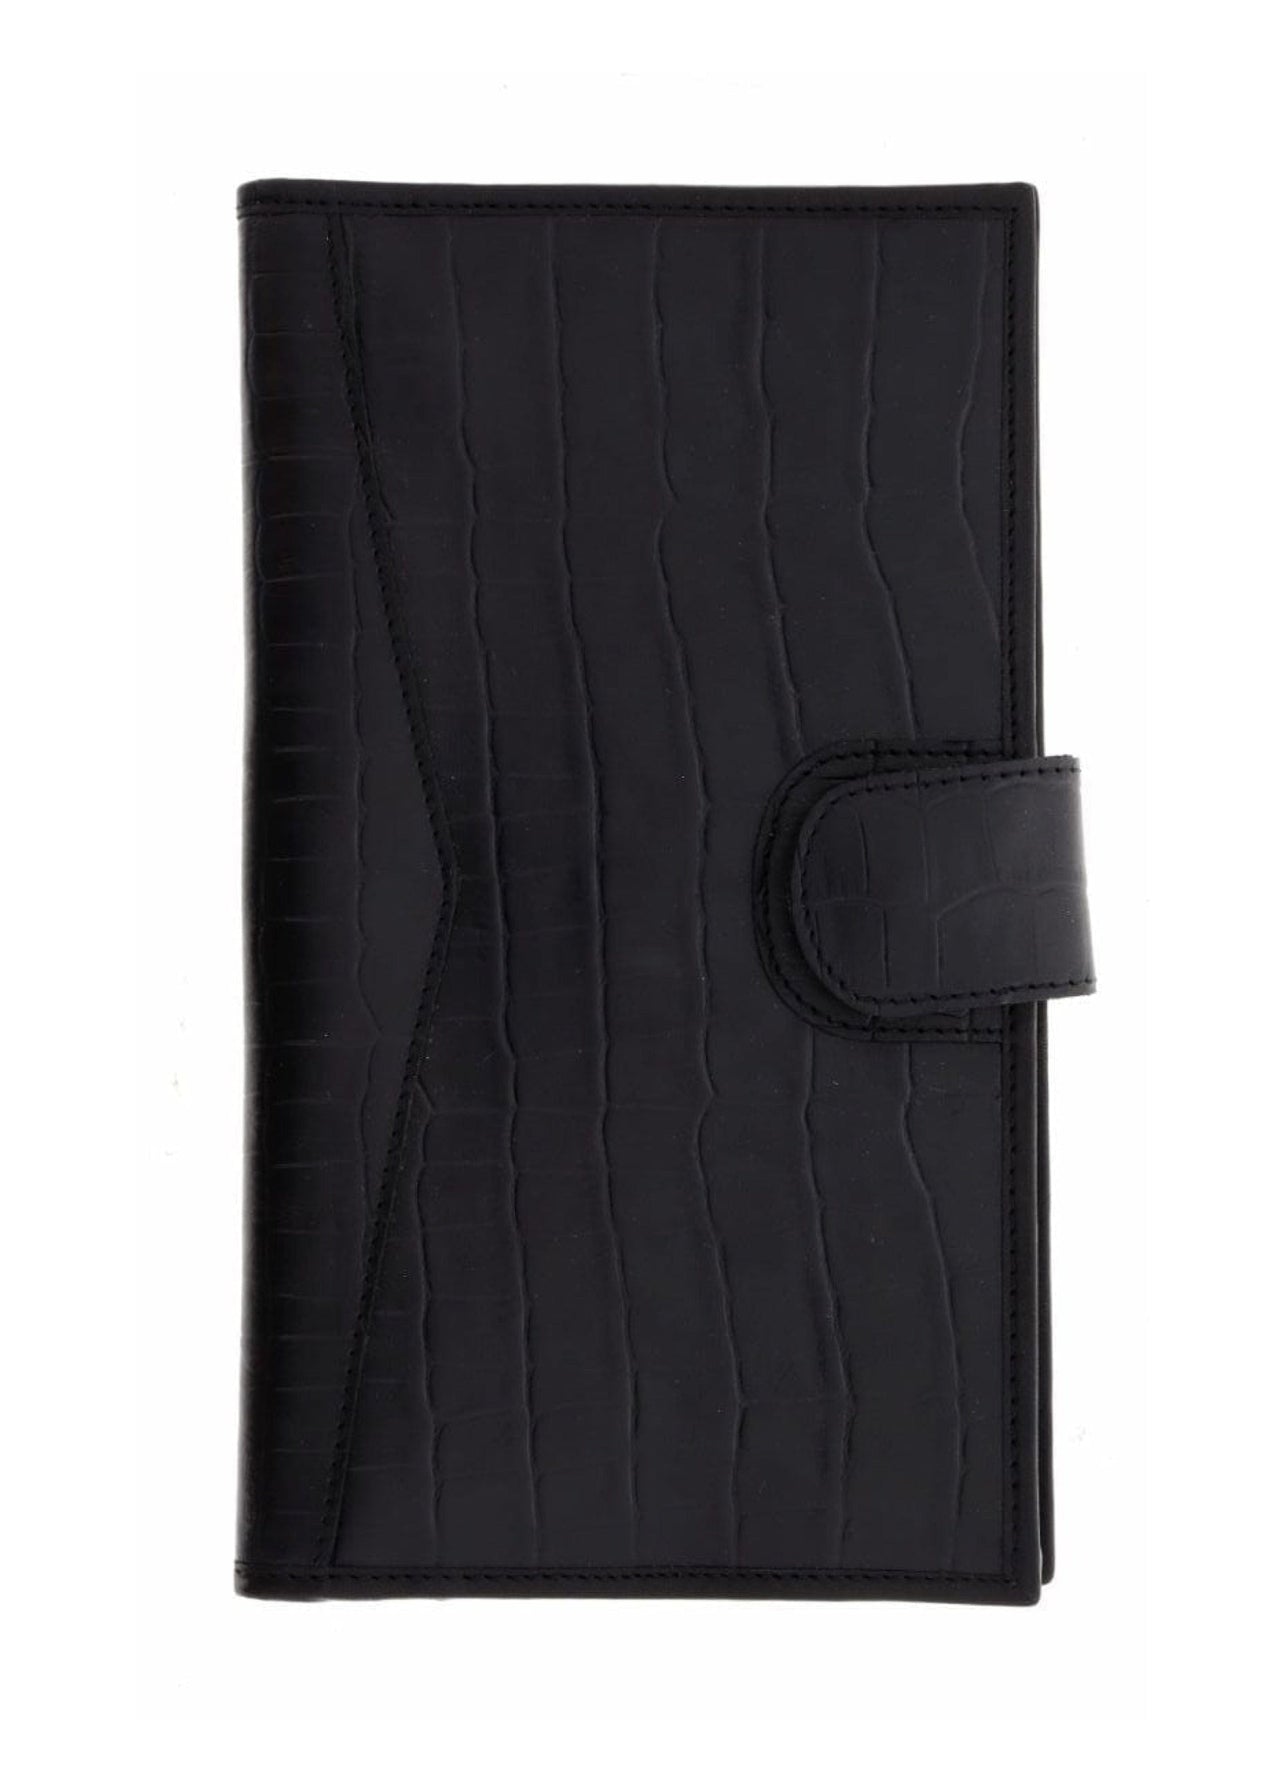 Alligator Embossed Leather Clutch | 2 Styles JaneMarie Handbags, Wallets & Cases Wallet